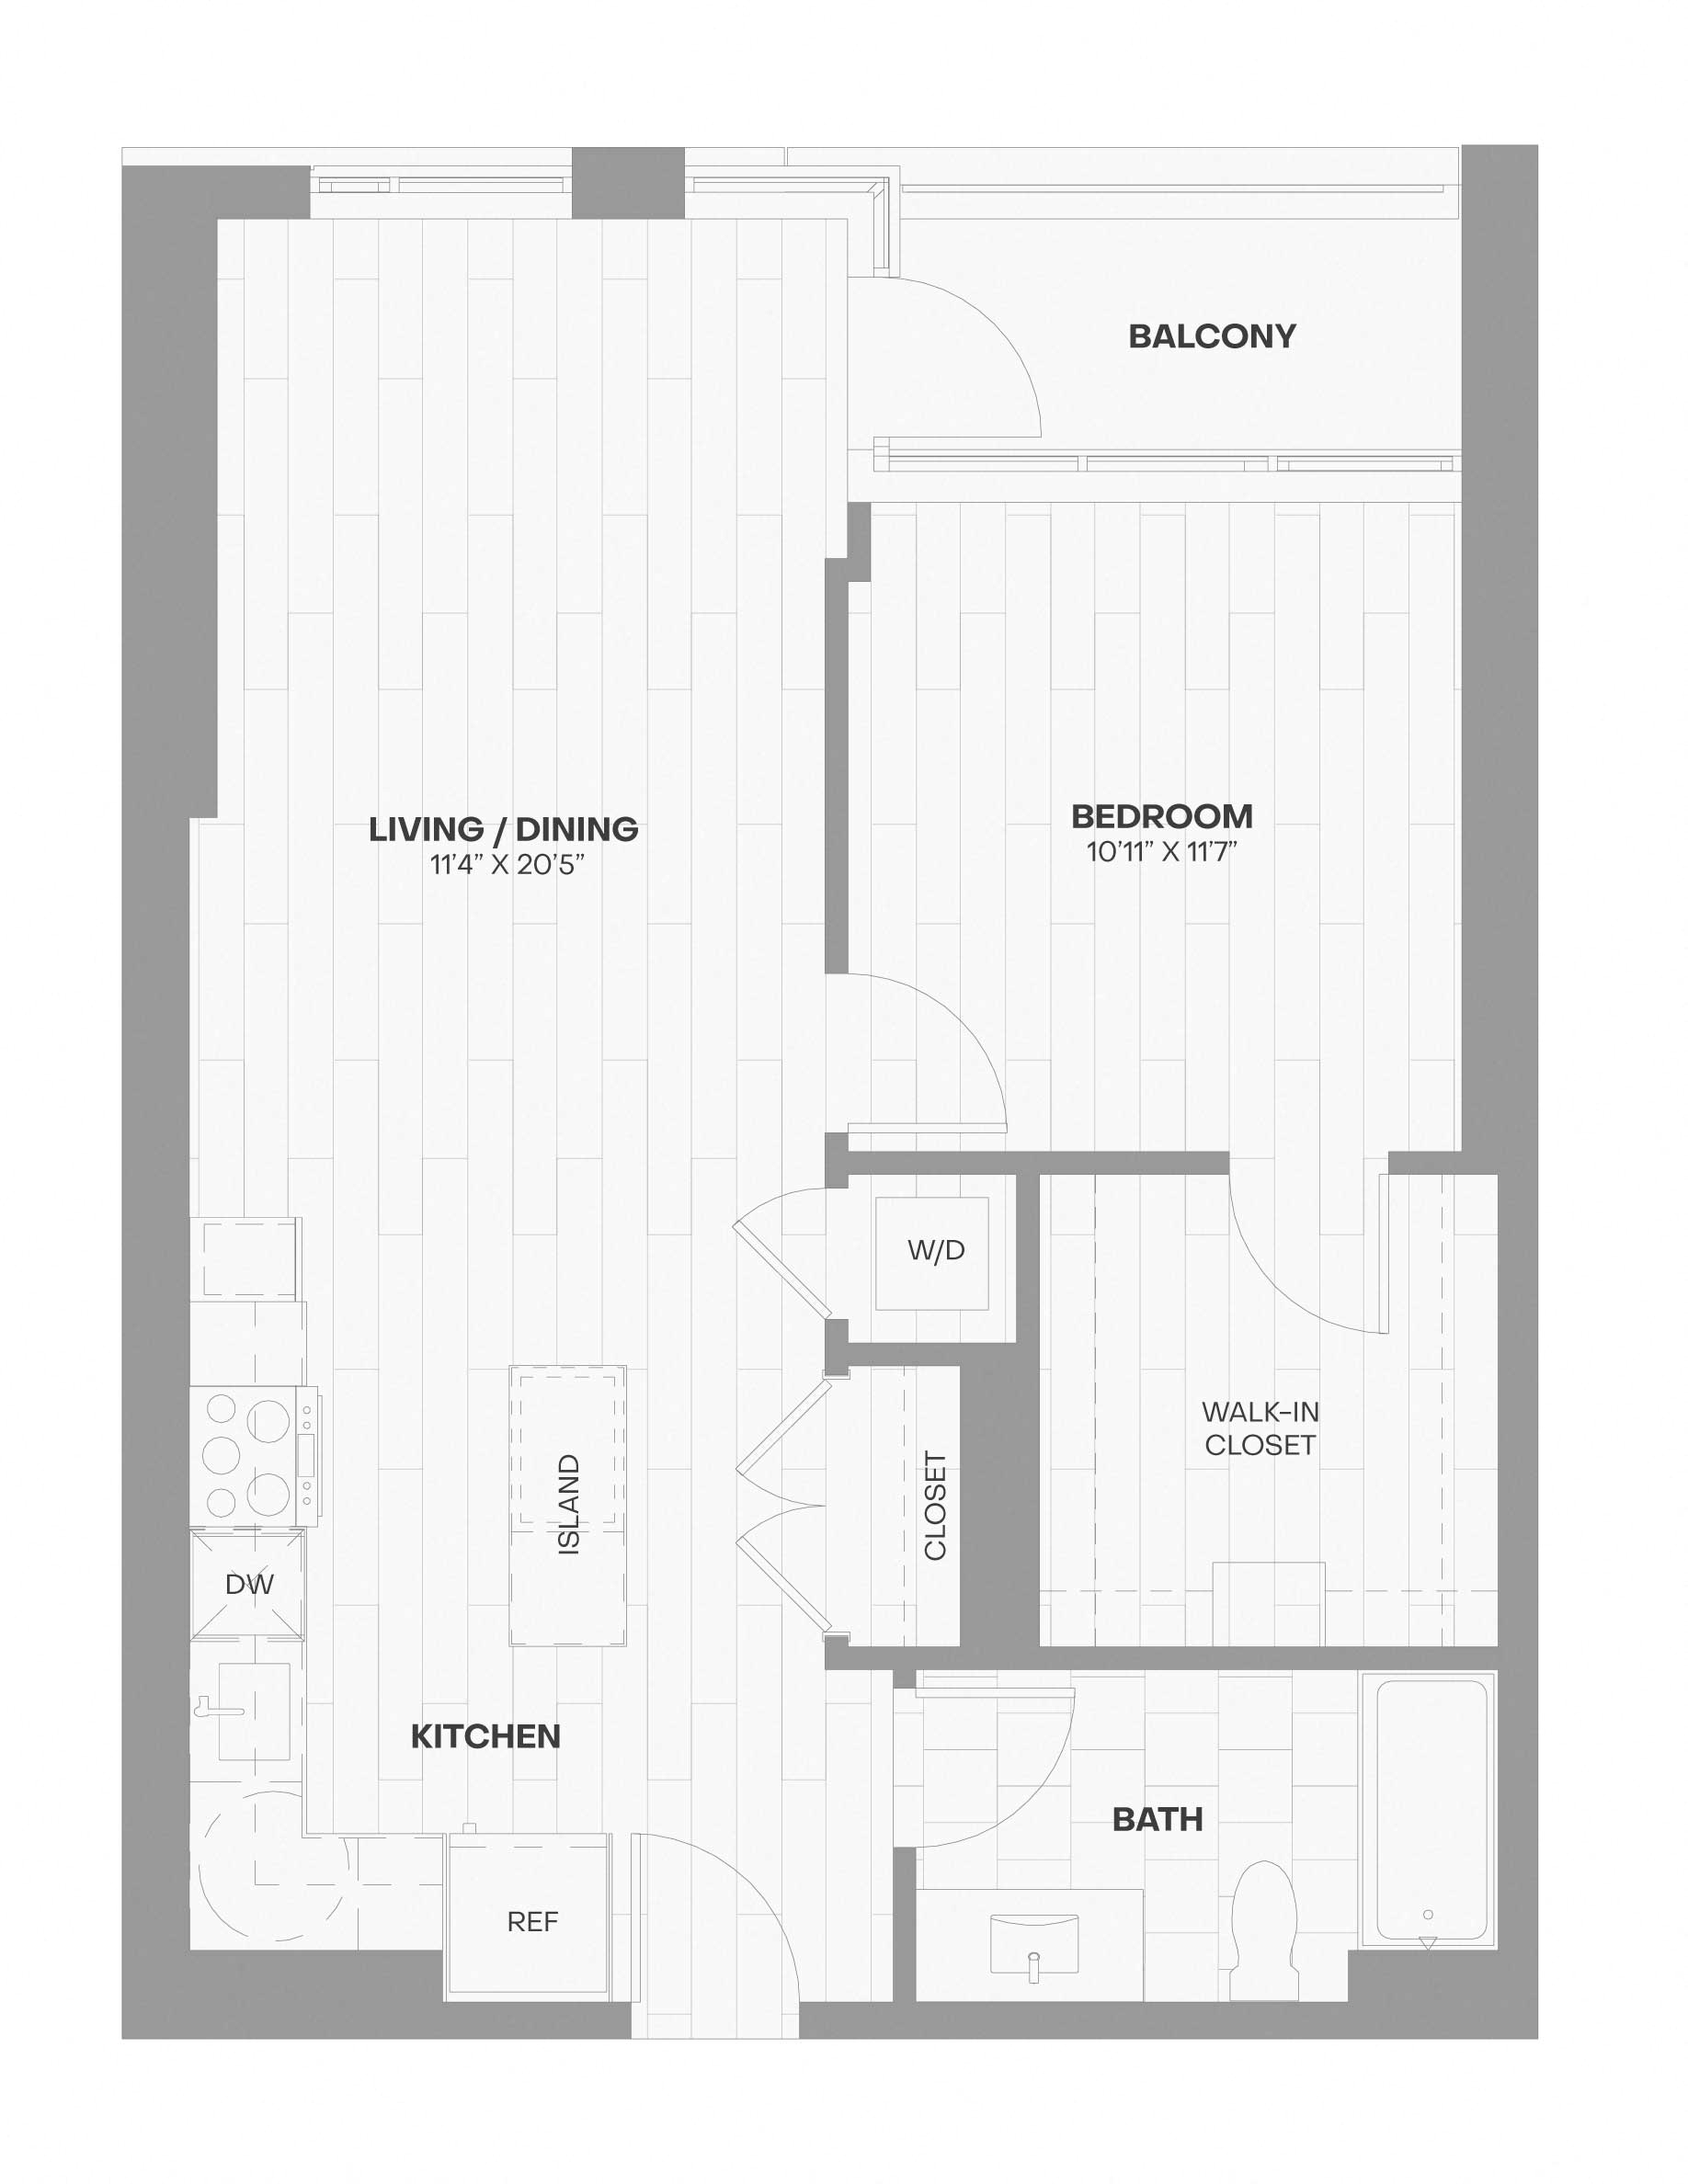 Apartment 0804 floorplan